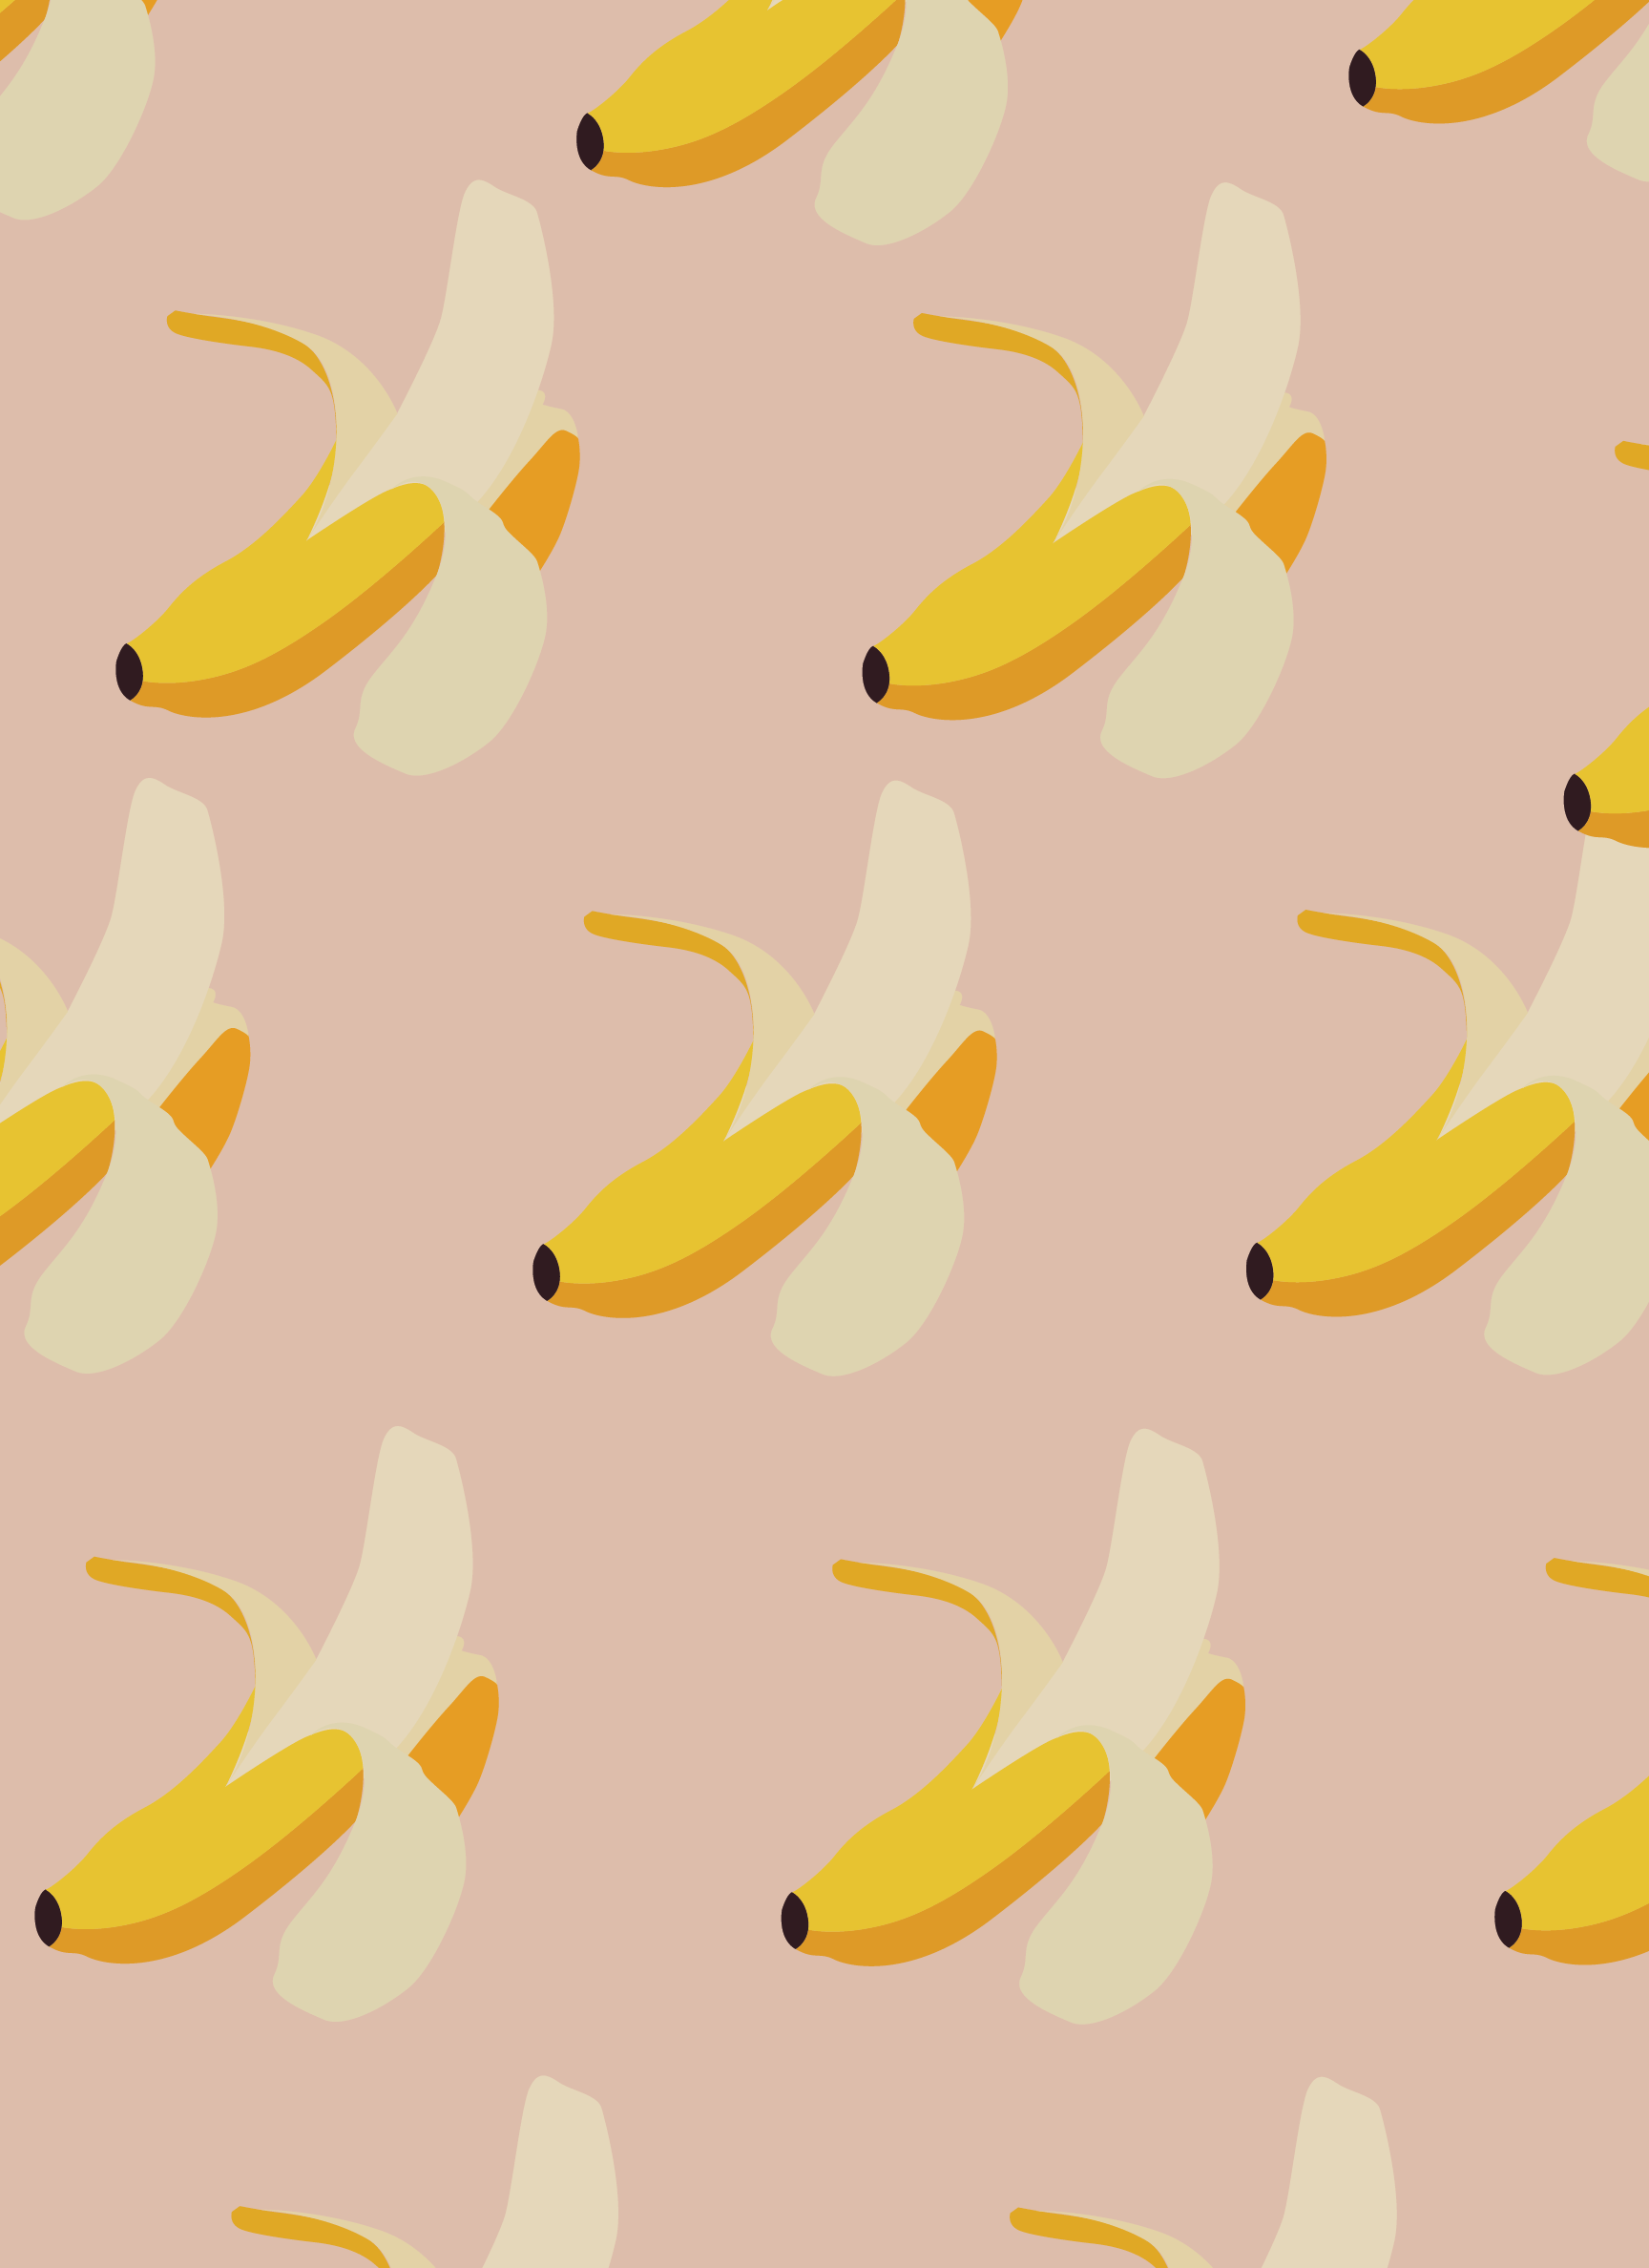 Cute Banana Wallpaper